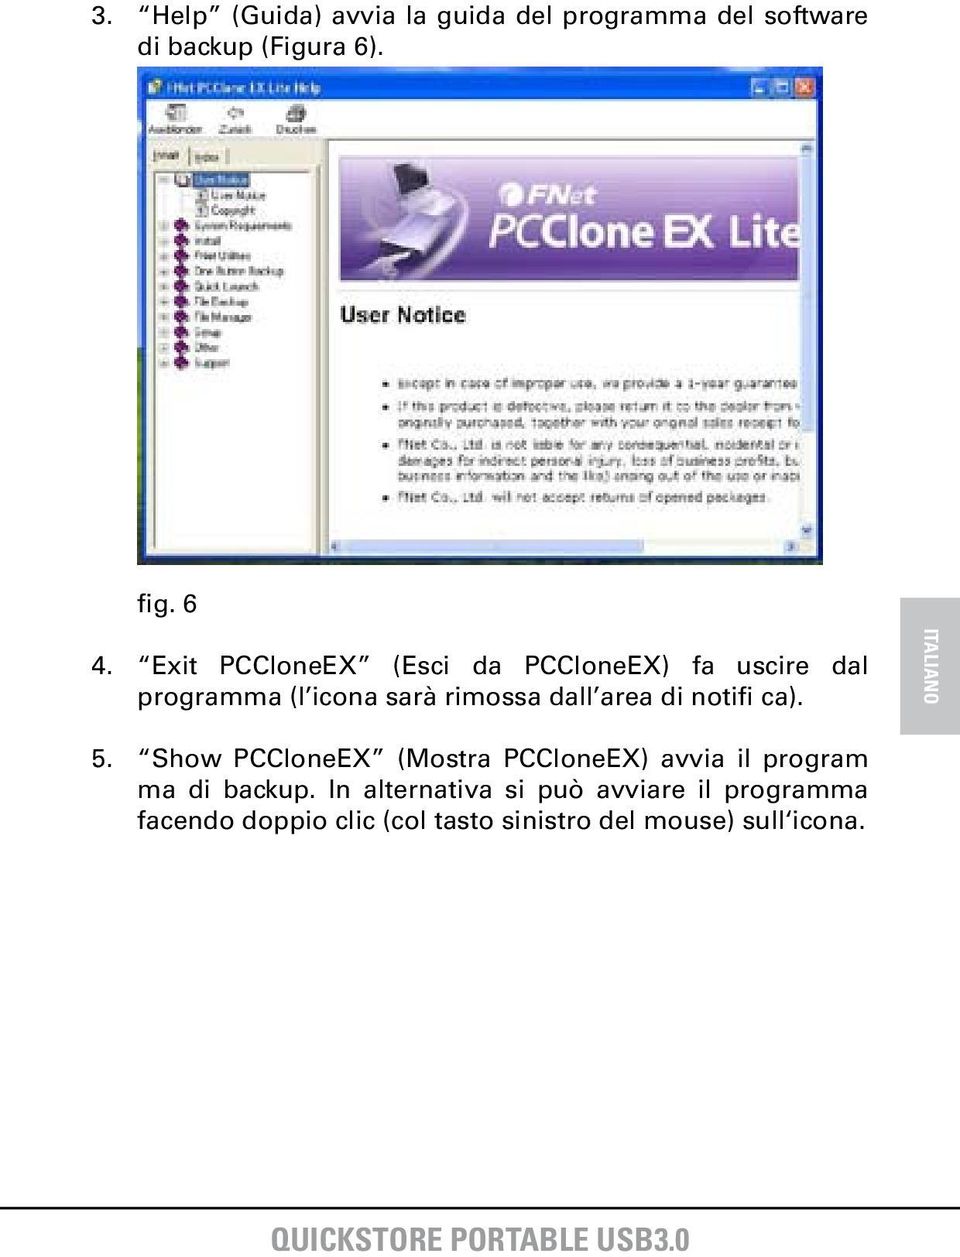 di notifi ca). 5. Show PCCloneEX (Mostra PCCloneEX) avvia il program ma di backup.